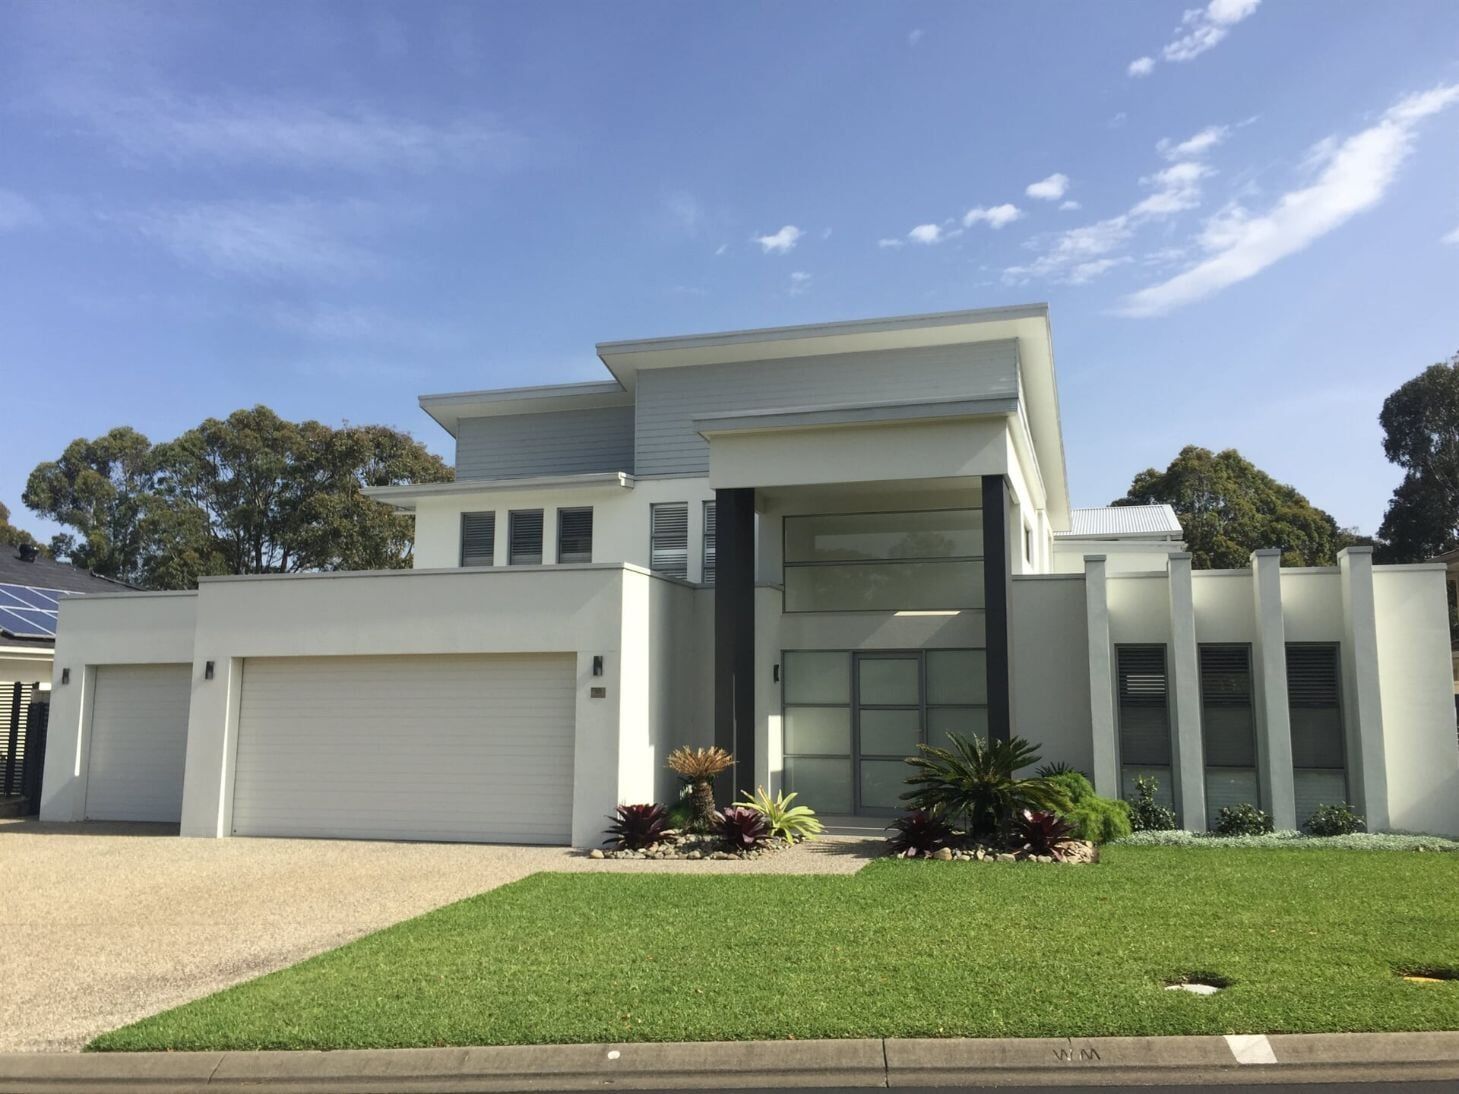 Home Construction — Aspex Construction in Port Macquarie, NSW